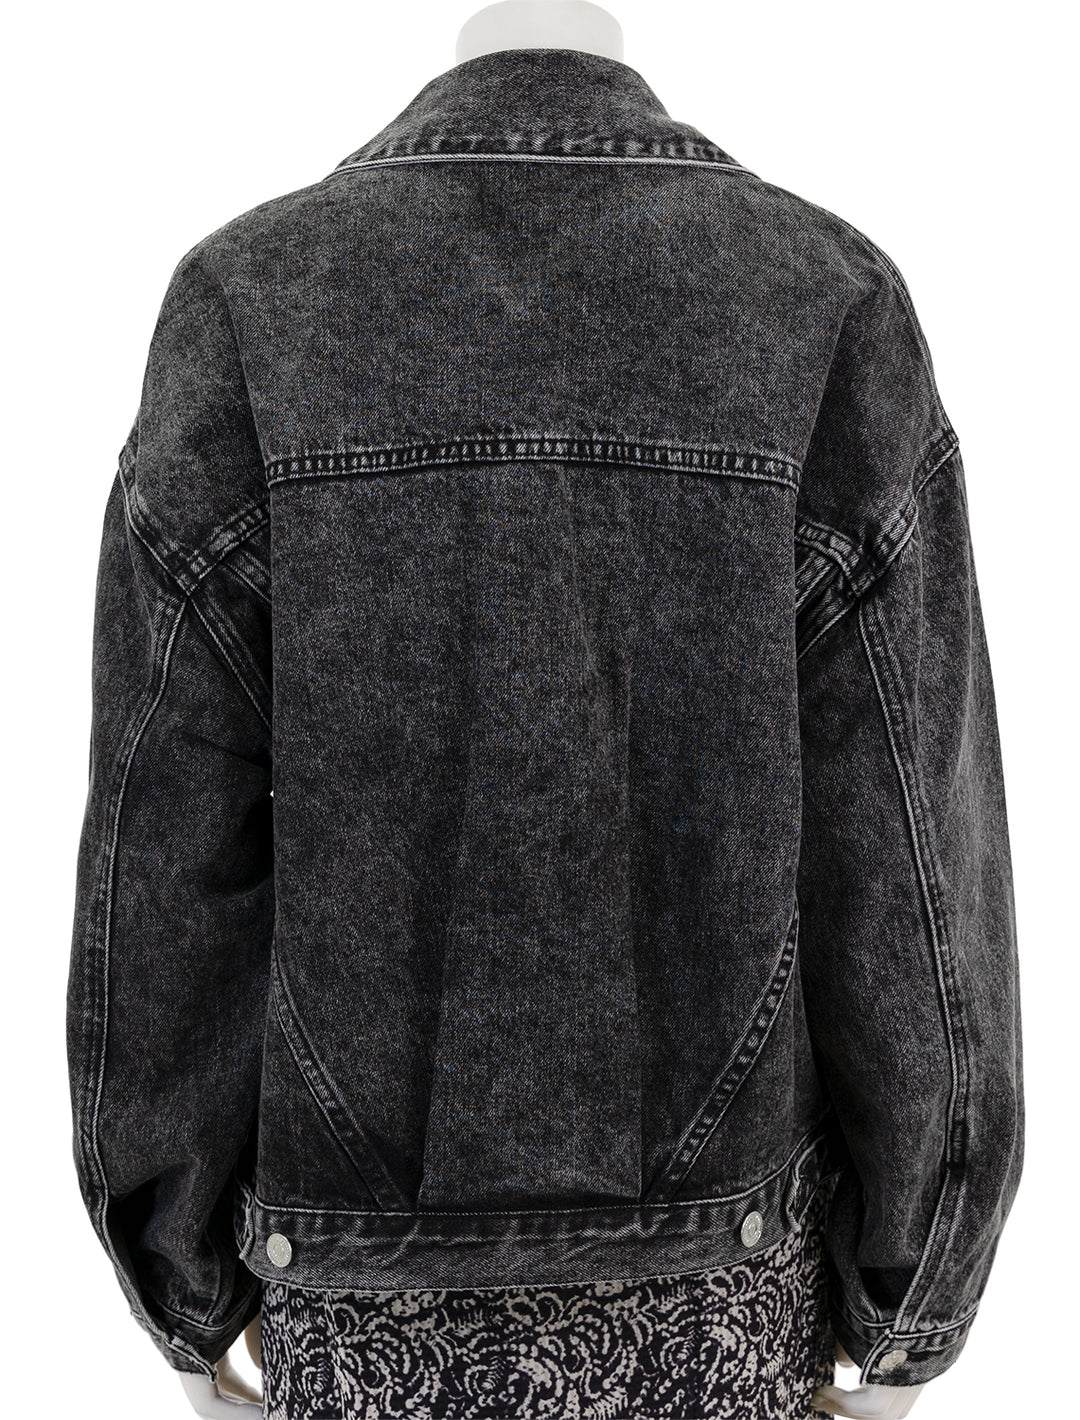 Back view of Steve Madden's sienna denim jacket in black.